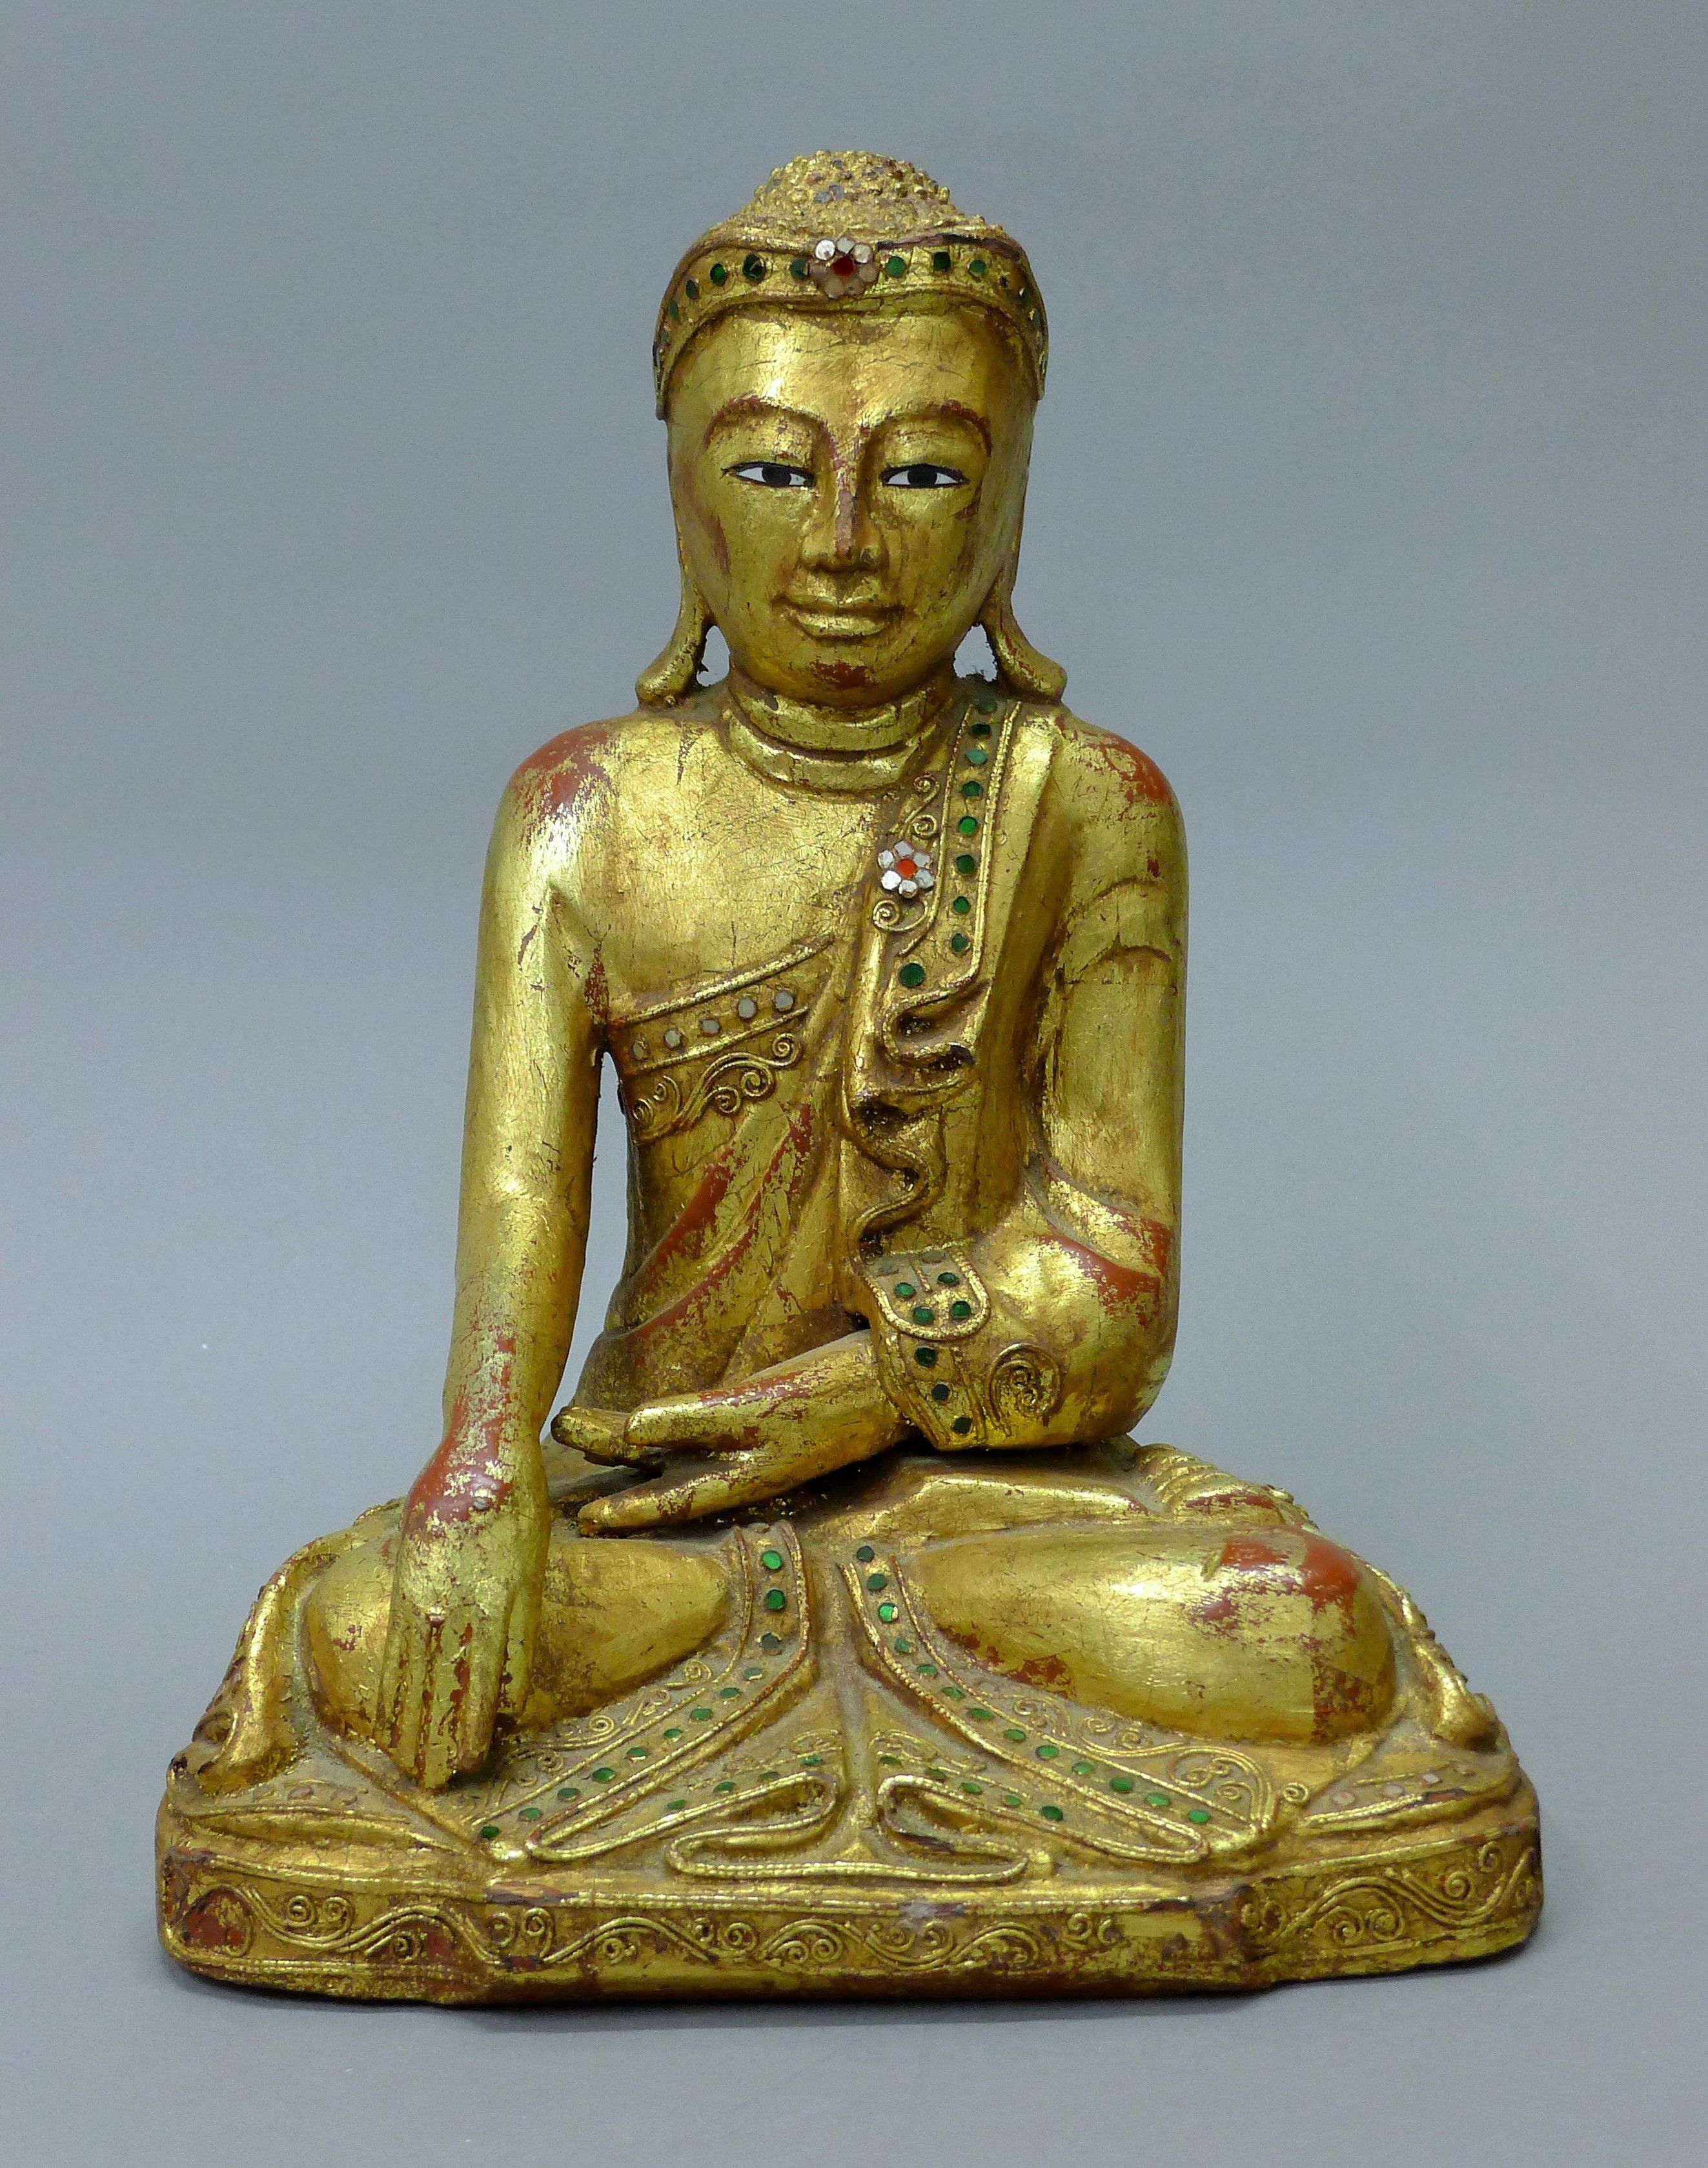 A gilt wood model of Buddha. 33 cm high.